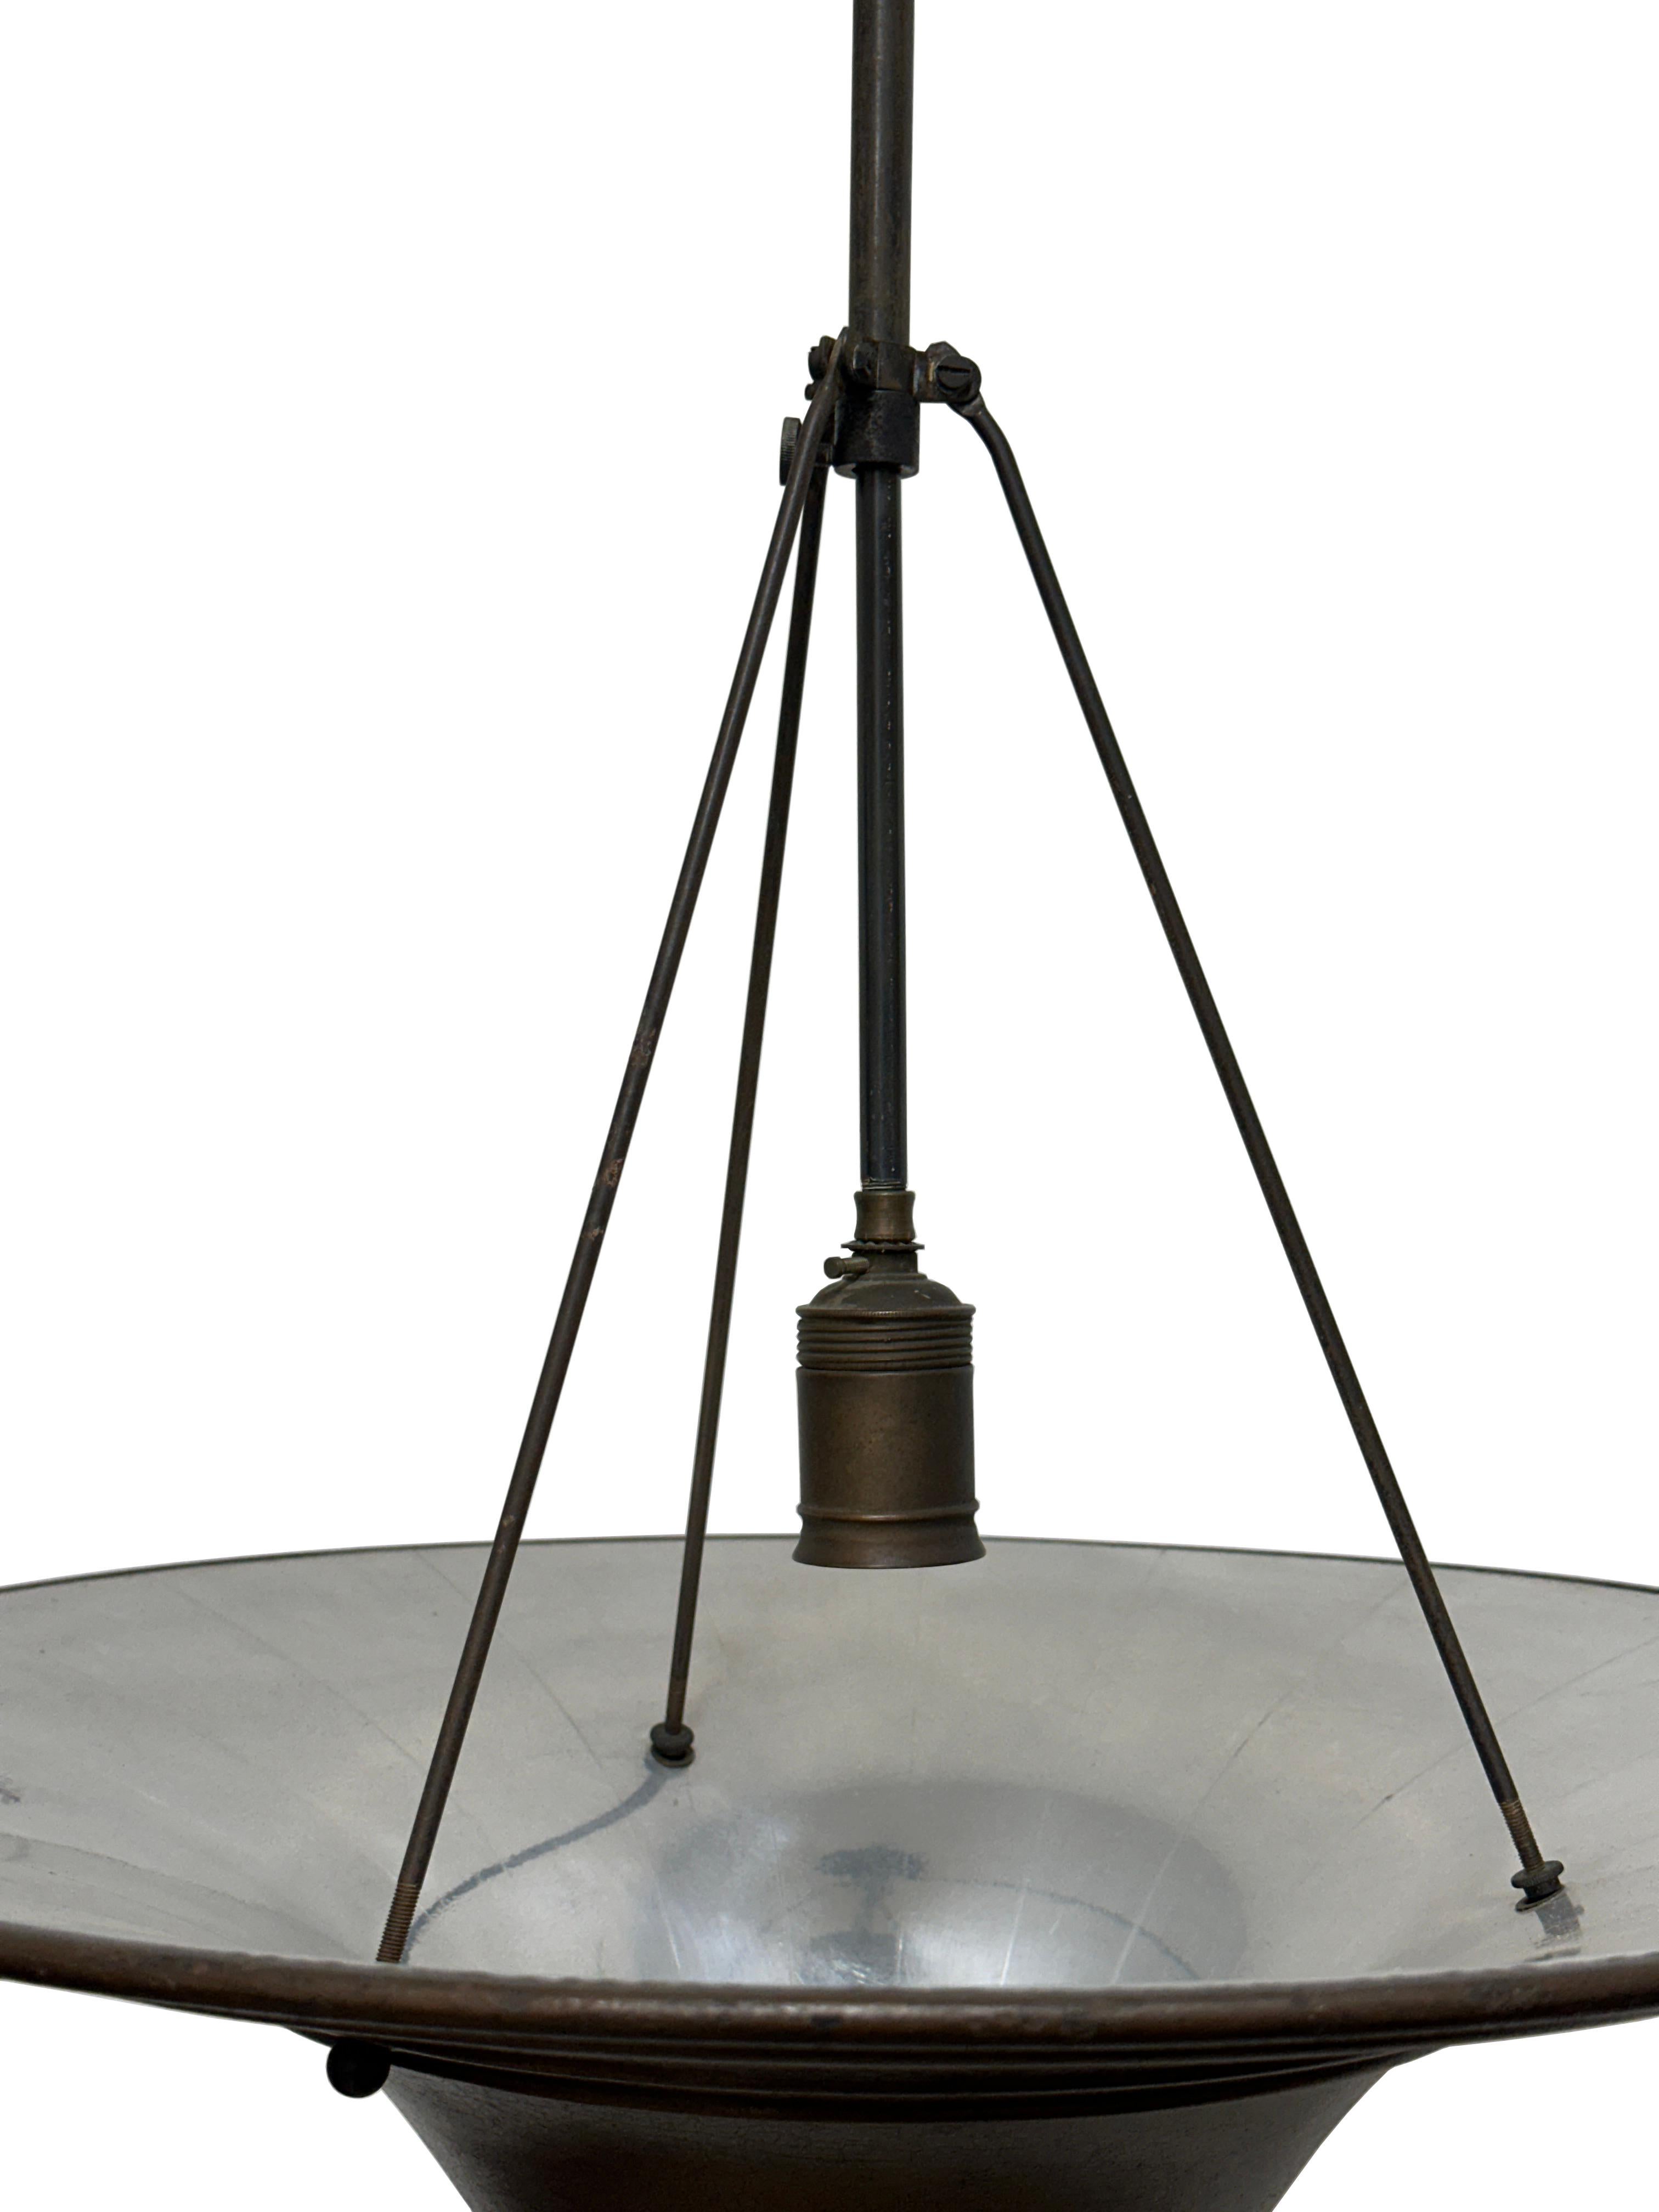 Copper Antique Vintage Industrial Bauhaus Wiskott Mirrored Ceiling Pendant Light Lamp For Sale